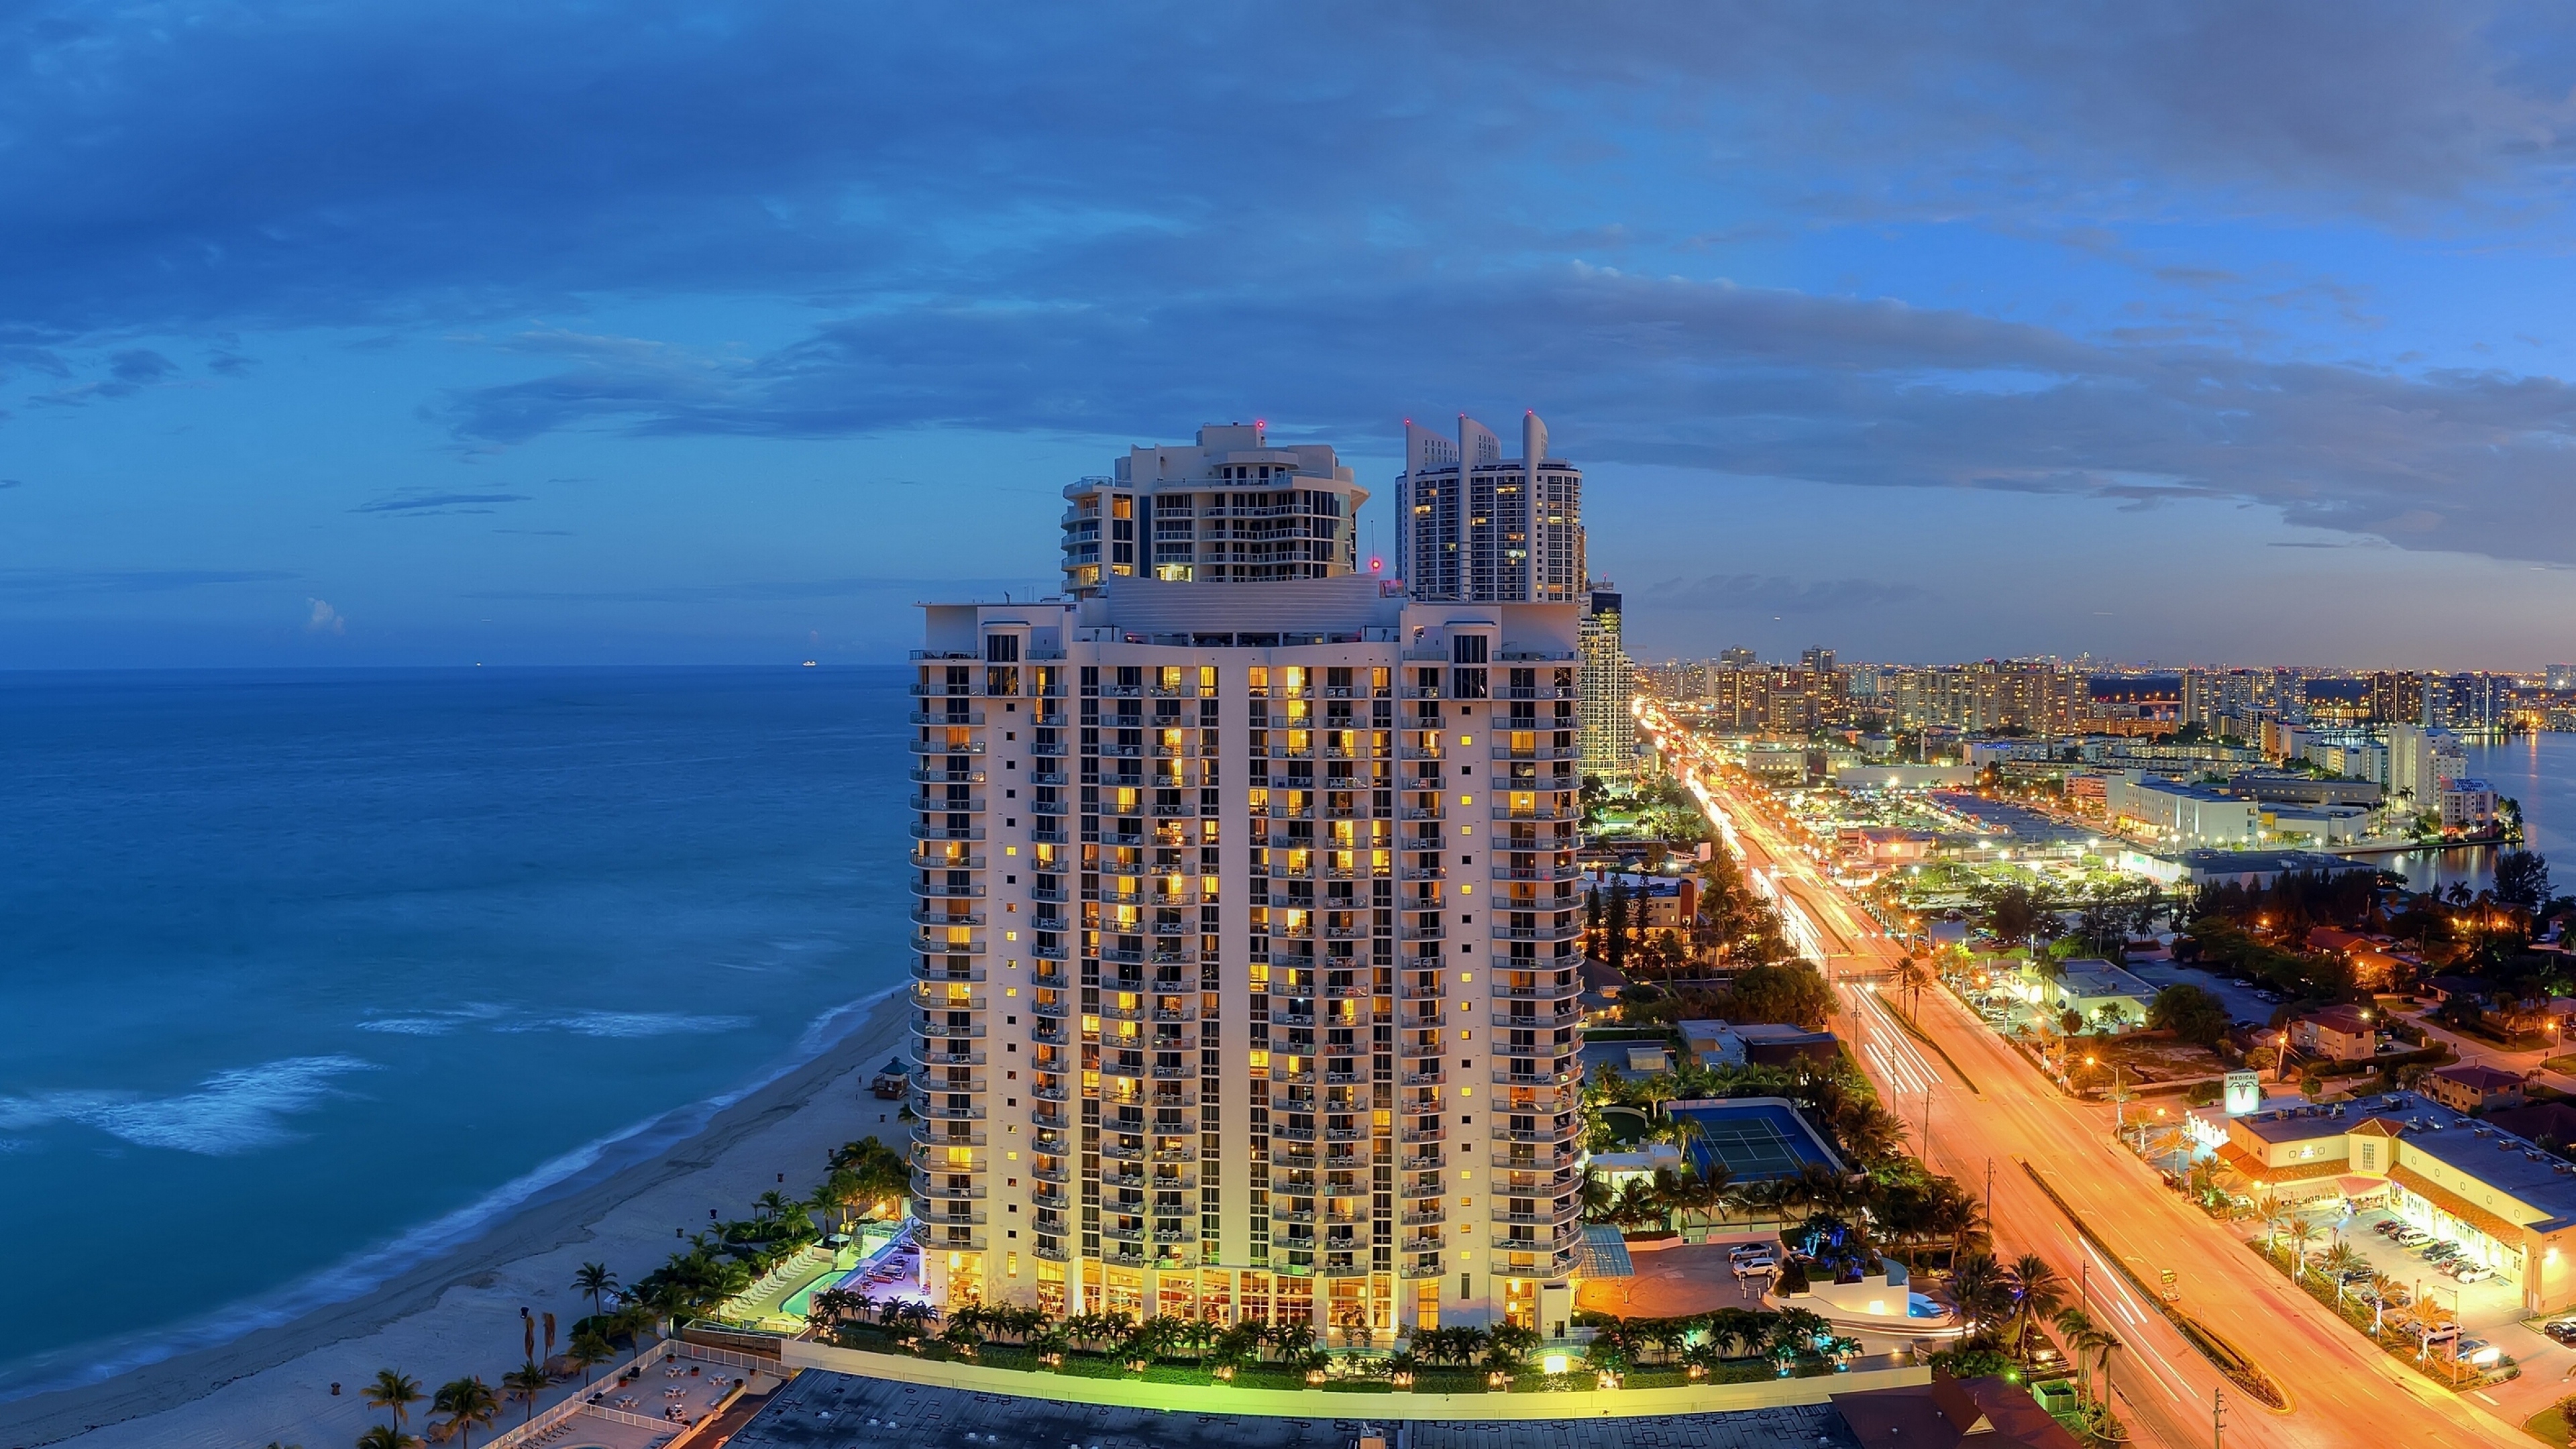 Panorama Atlantic Coast City Nightlife 4k Ultra HD Background